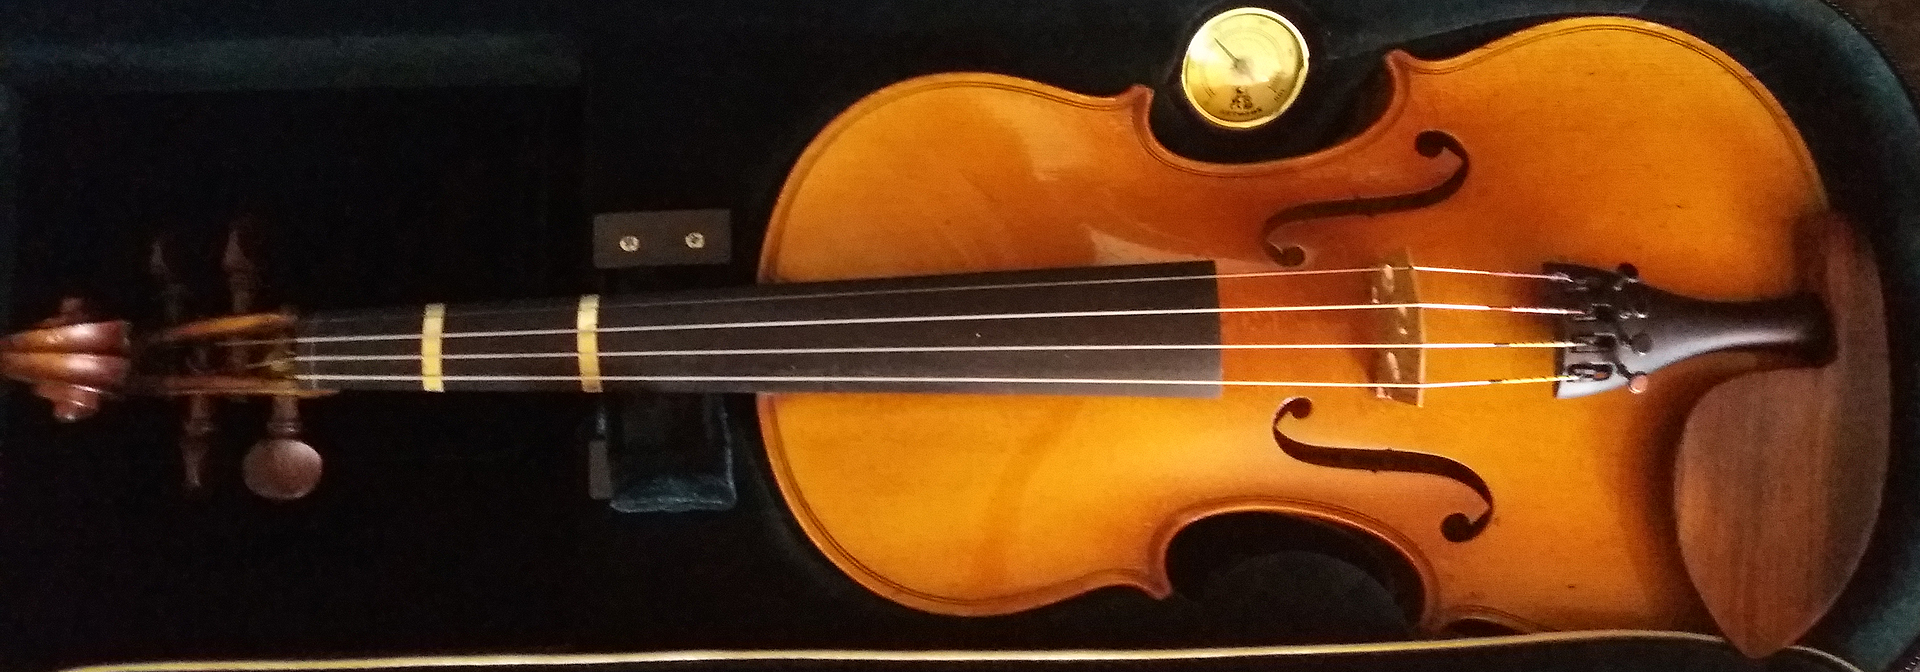 My violin, gorgeous